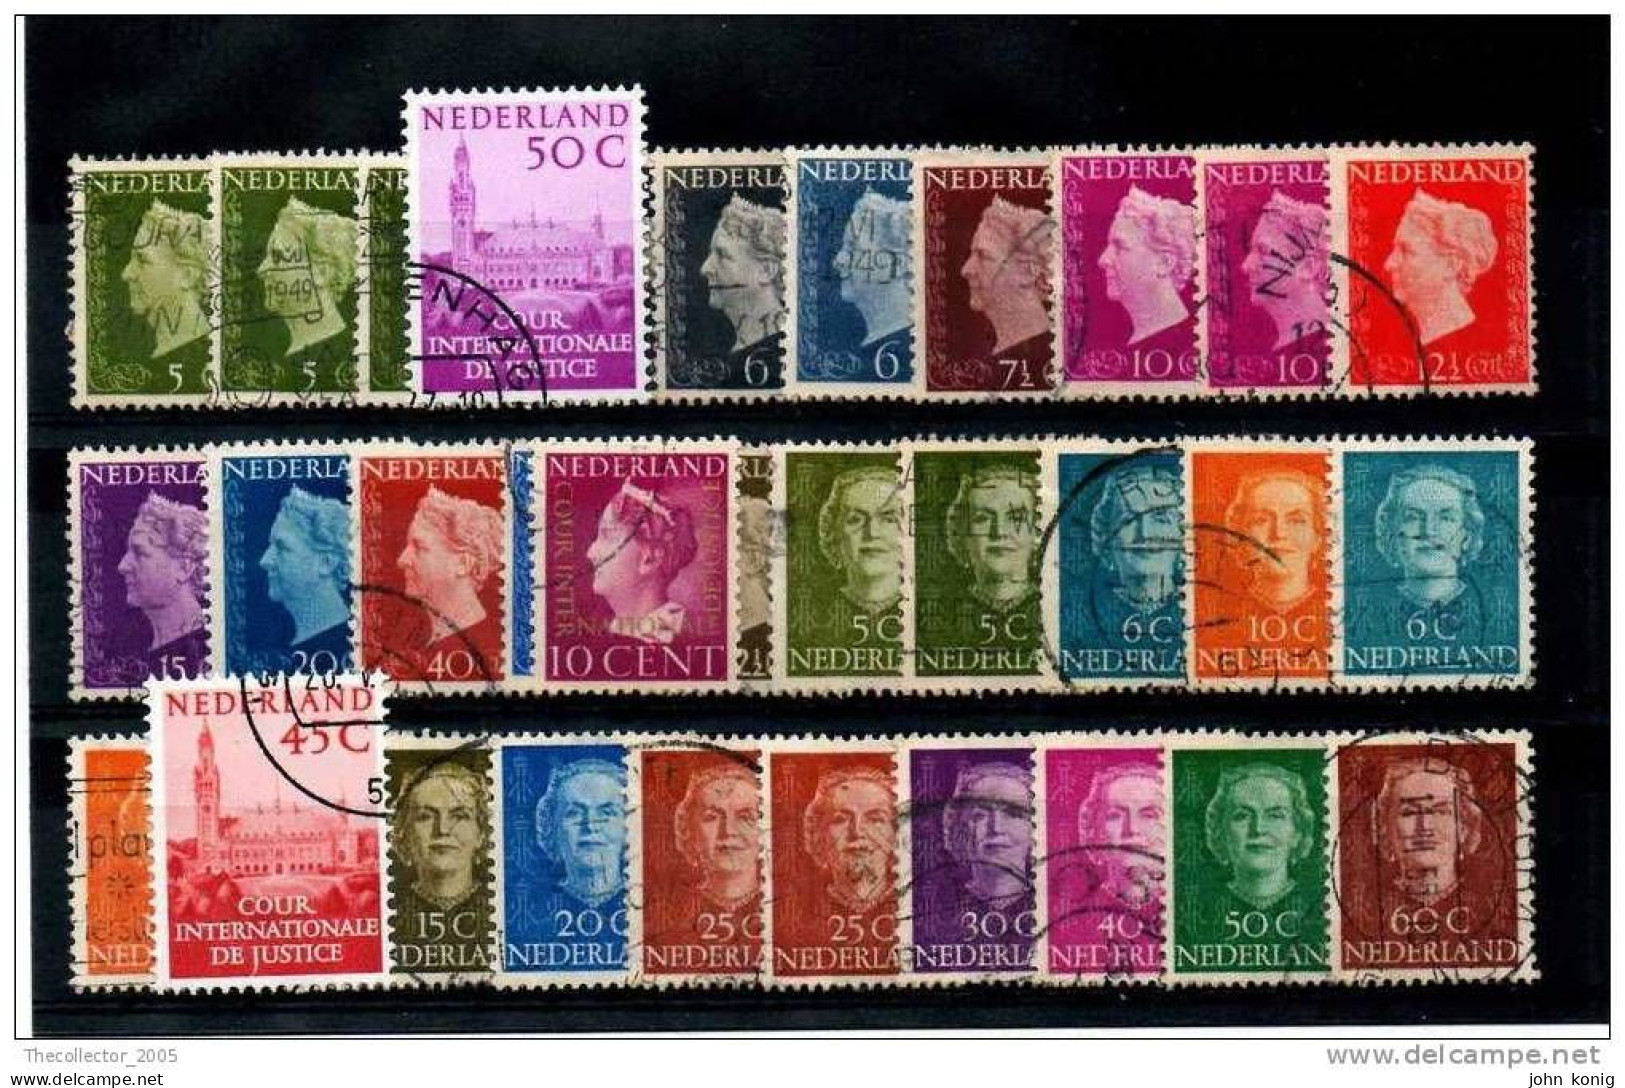 OLANDA - PAESI BASSI - HOLLAND - NEDERLAND - Lotto Francobolli - Stamps Lot - Collections